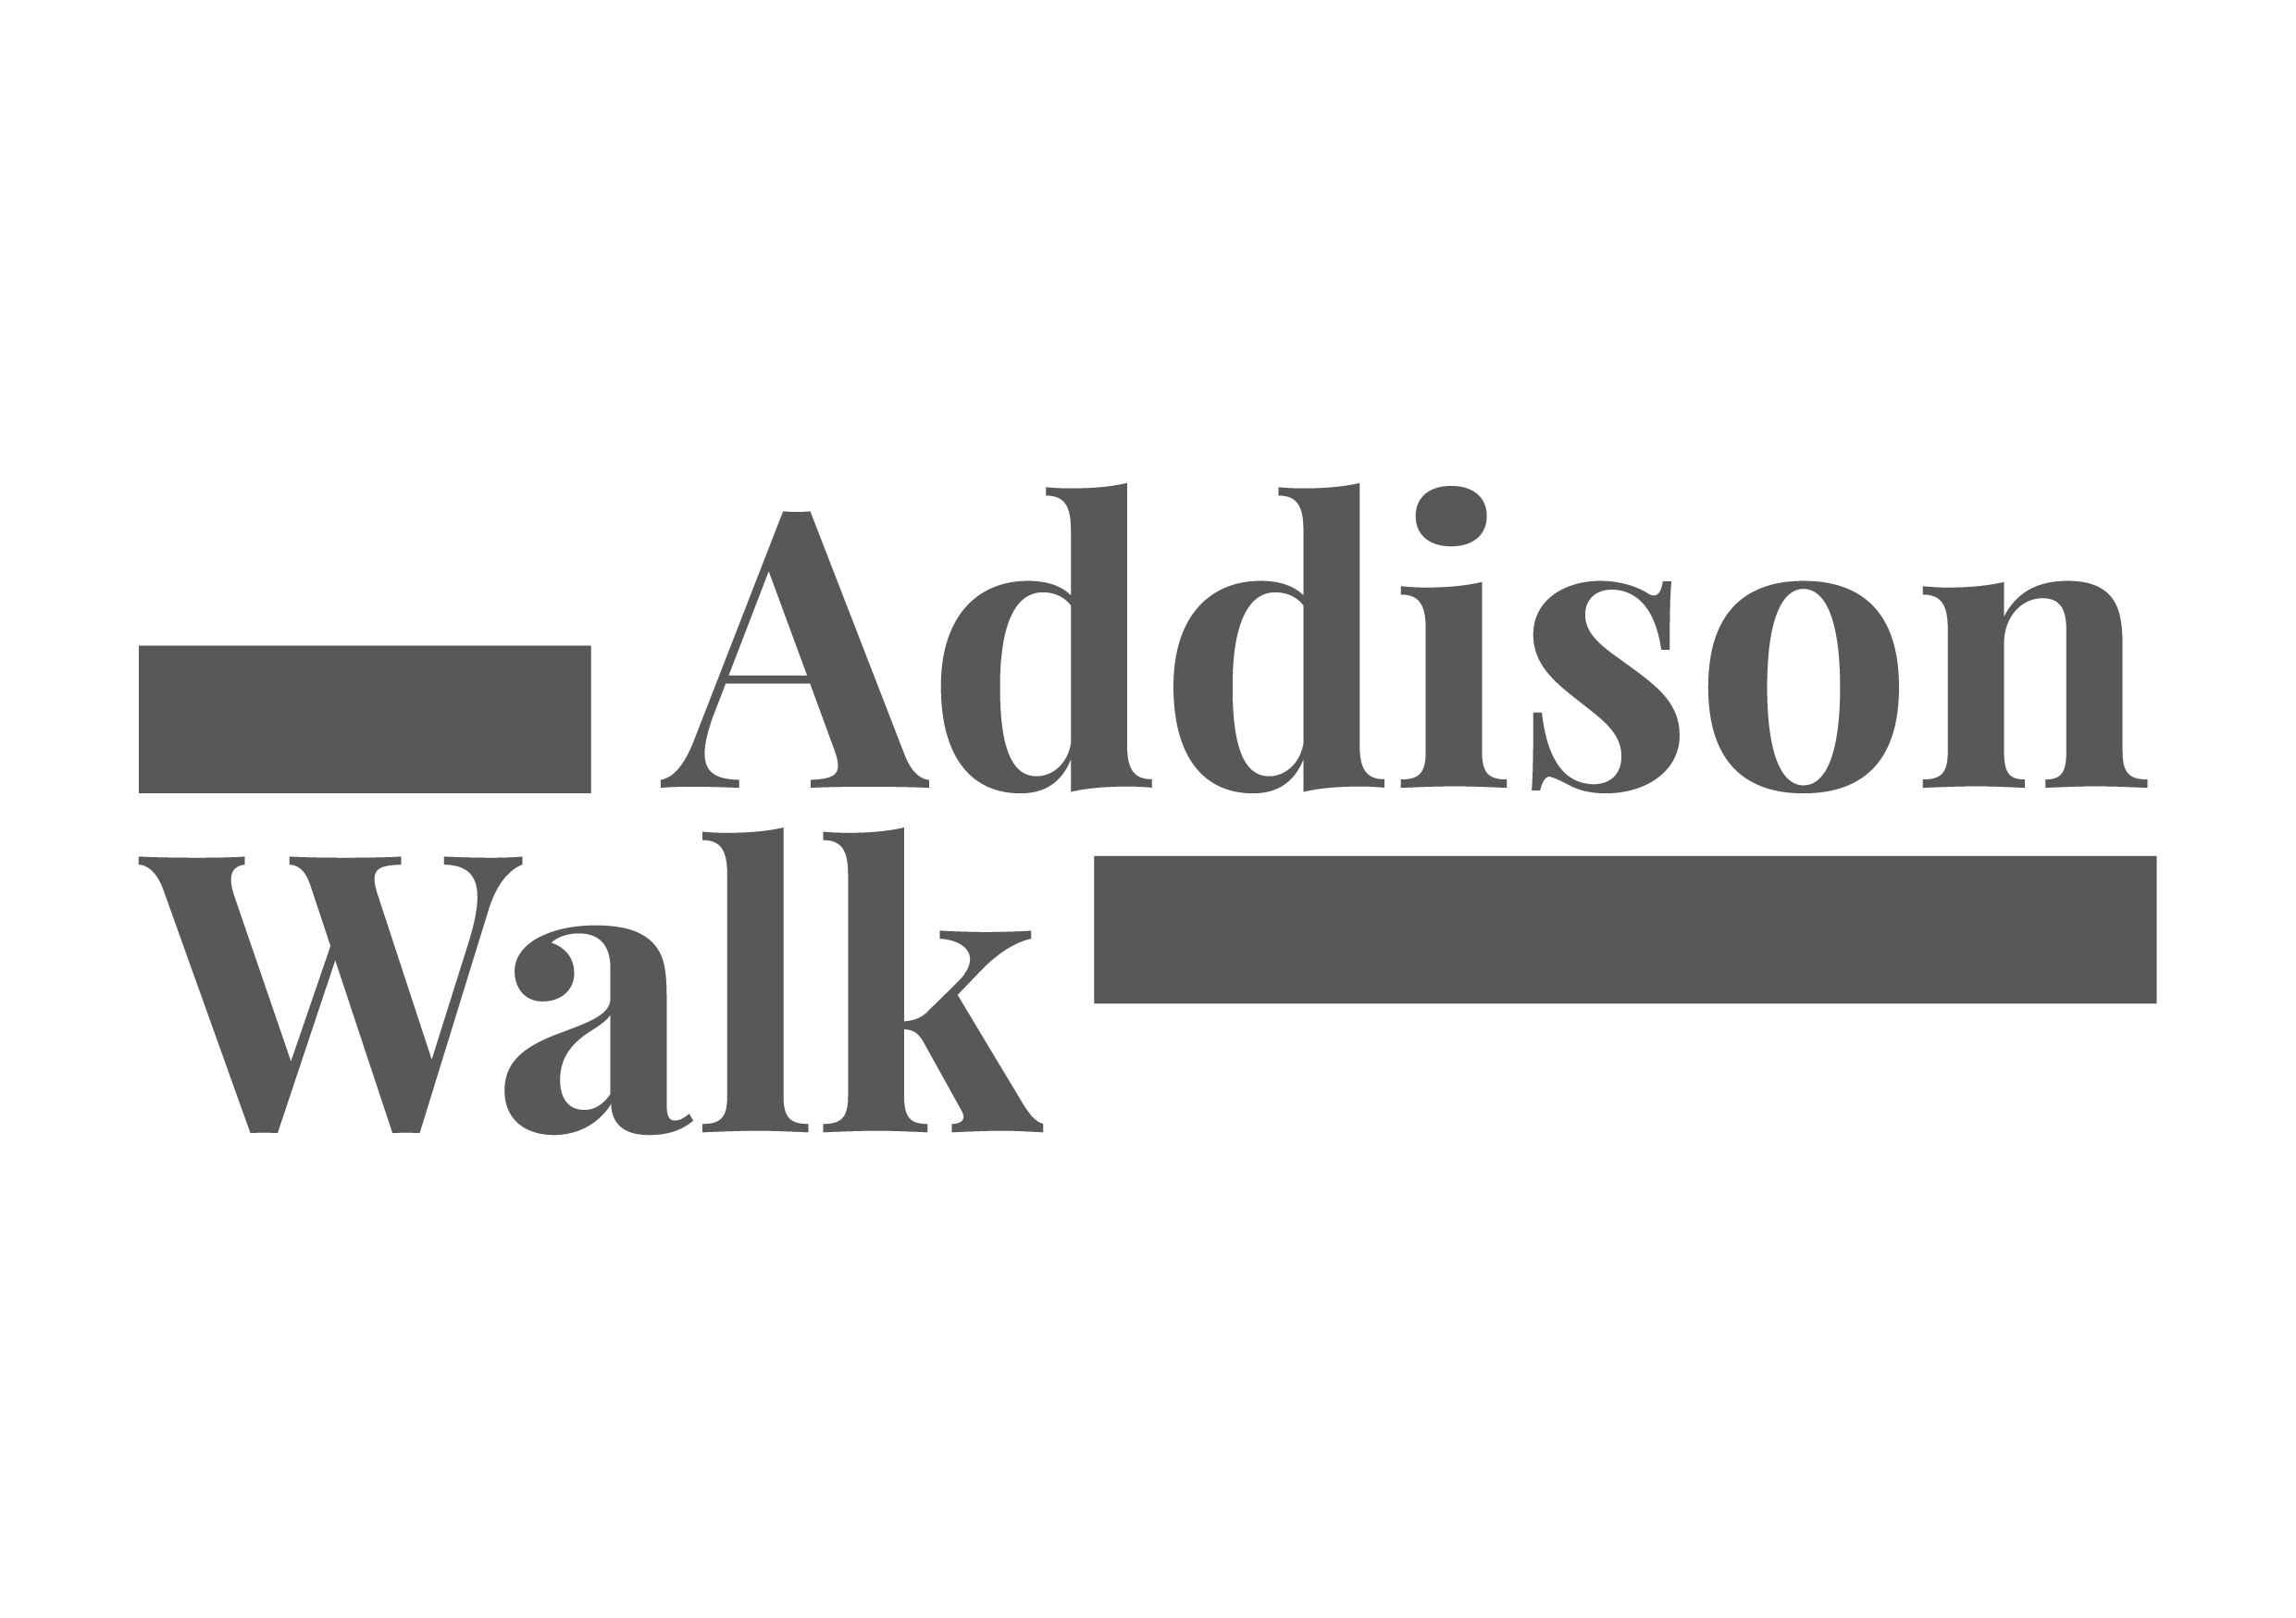 Addison Walk Williams Landing grey